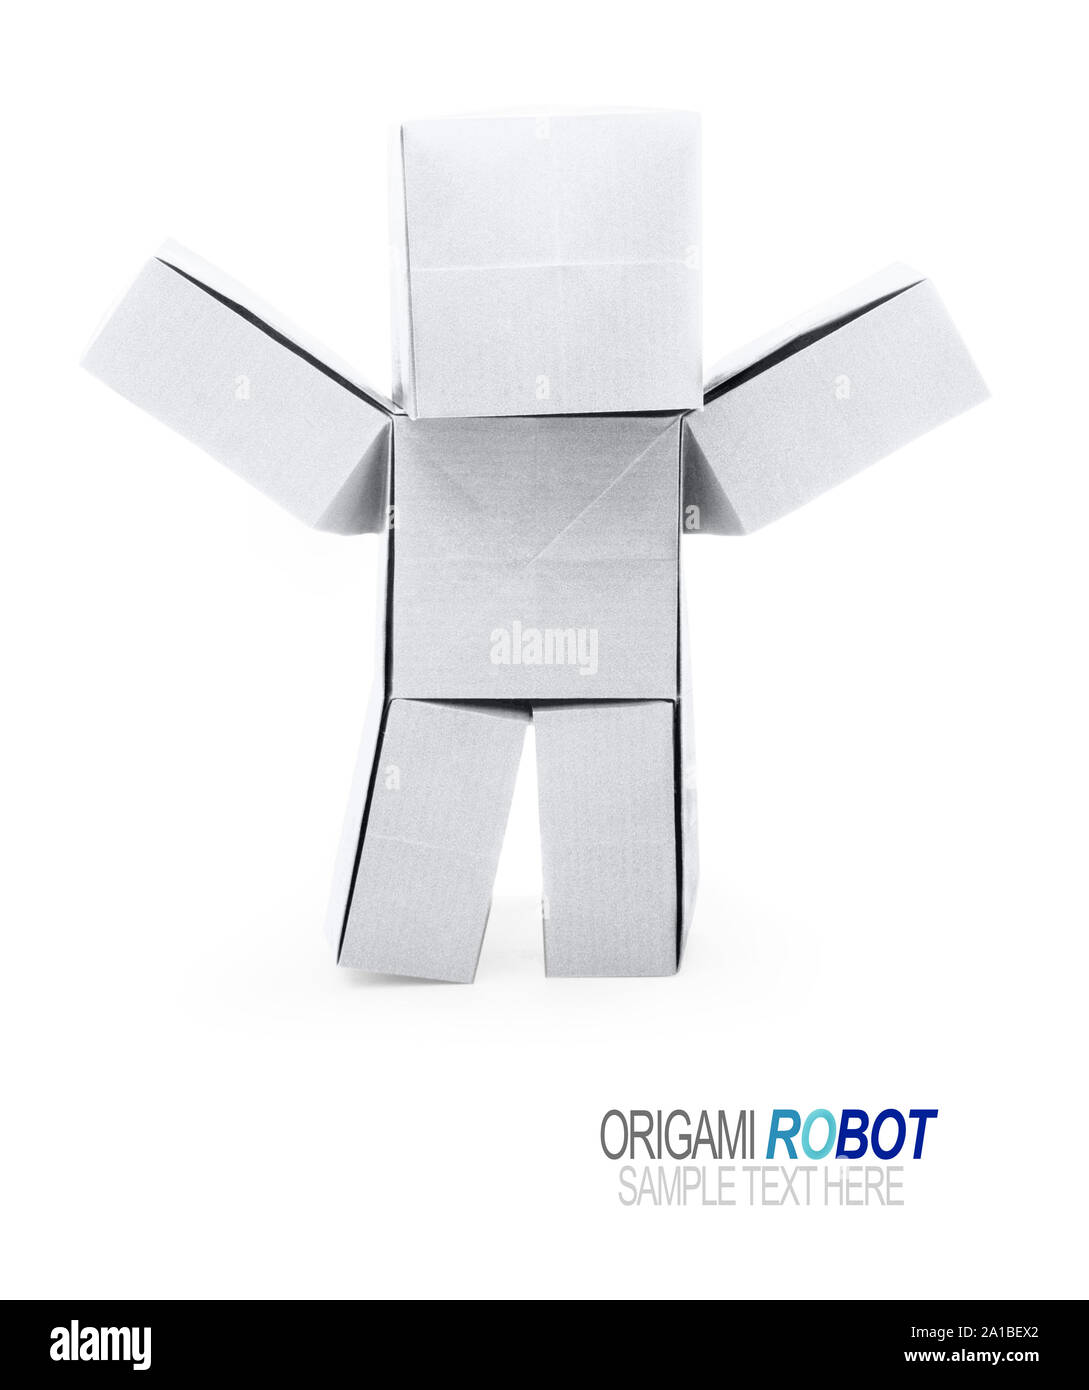 Paper origami robot Stock Photo - Alamy